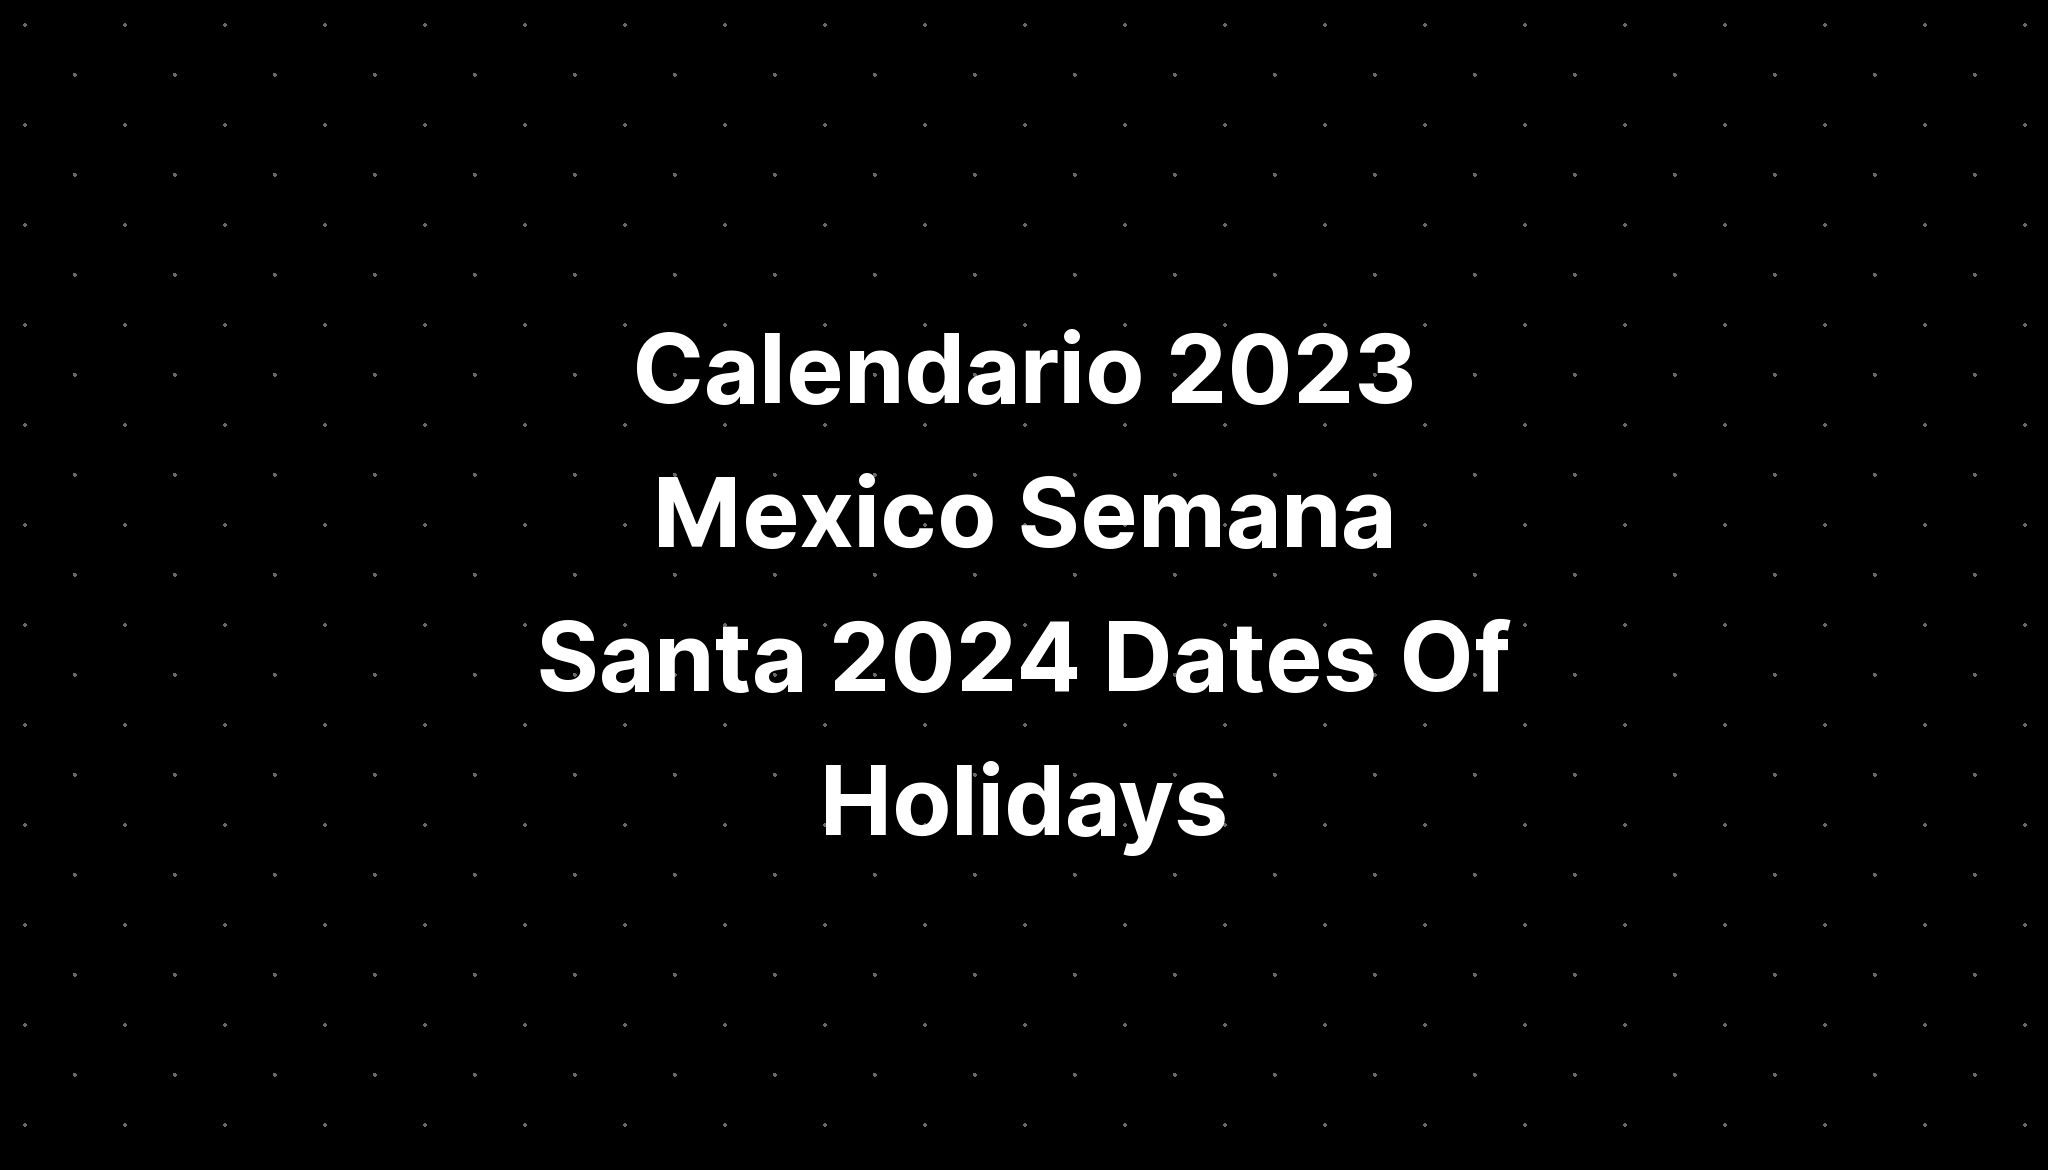 Calendario 2023 Mexico Semana Santa 2024 Dates Of Holidays IMAGESEE